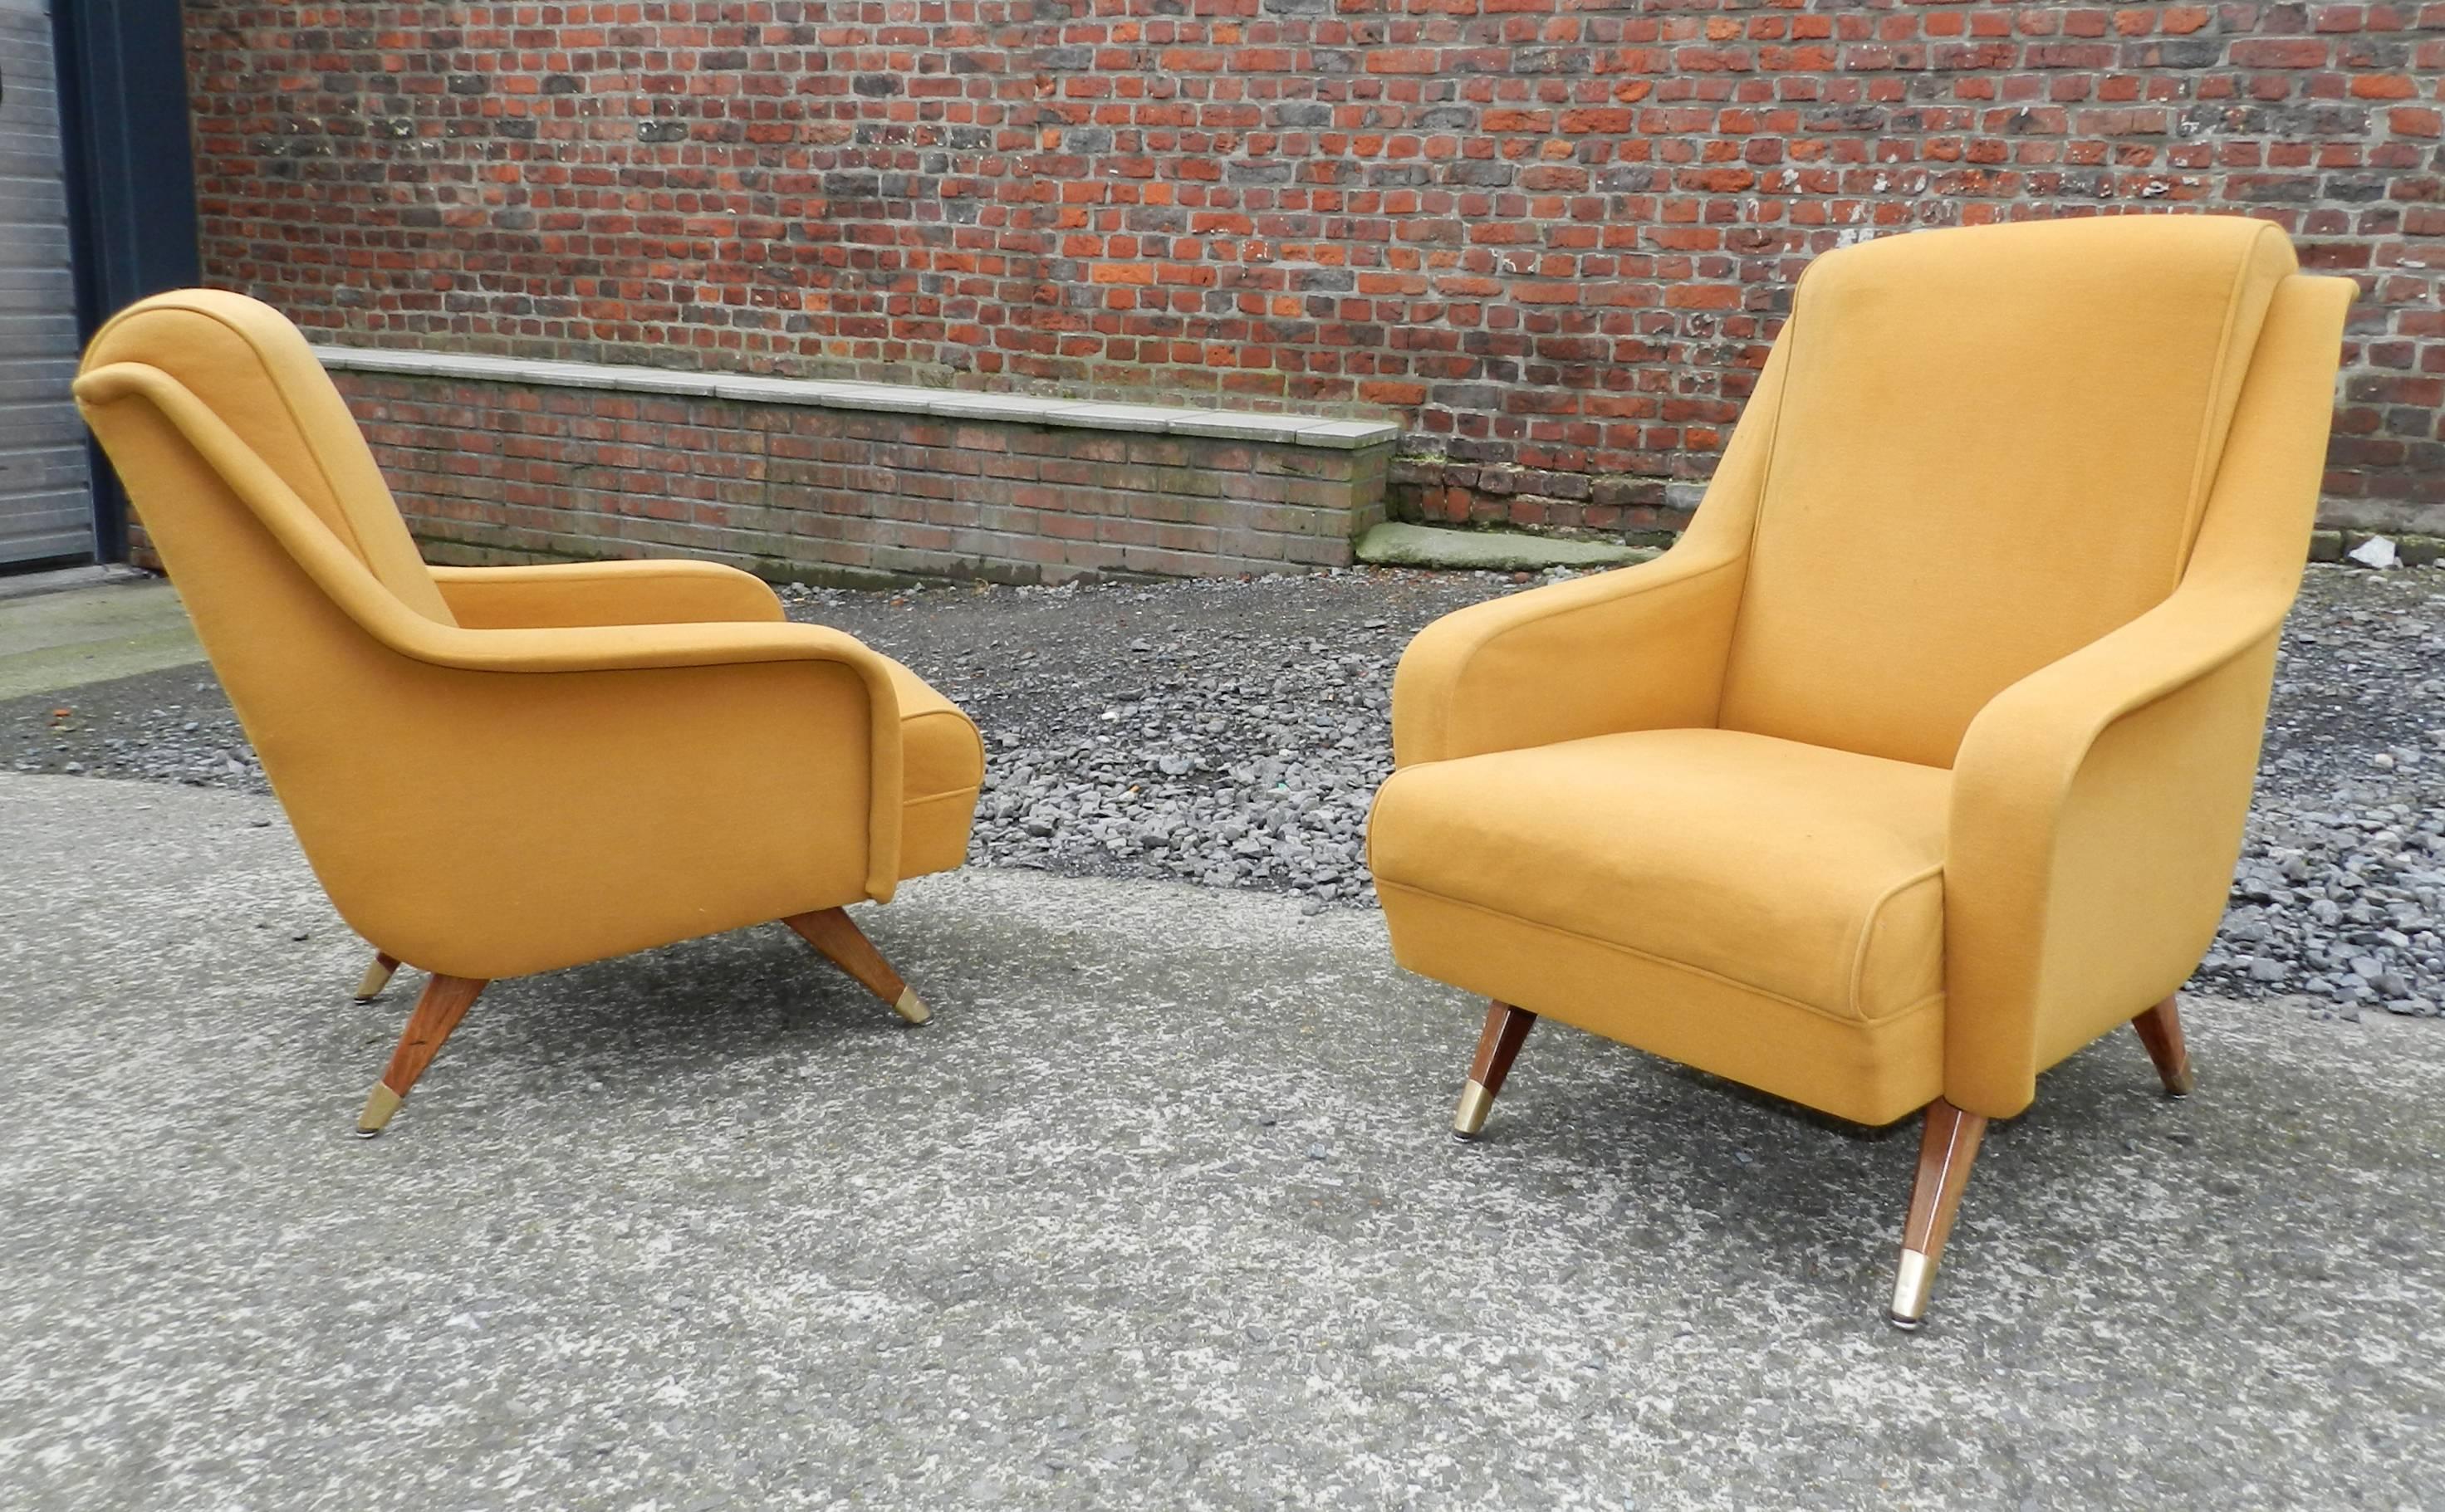 ERTON , Pair of vintage armchairs, circa 1950.
Fully original.